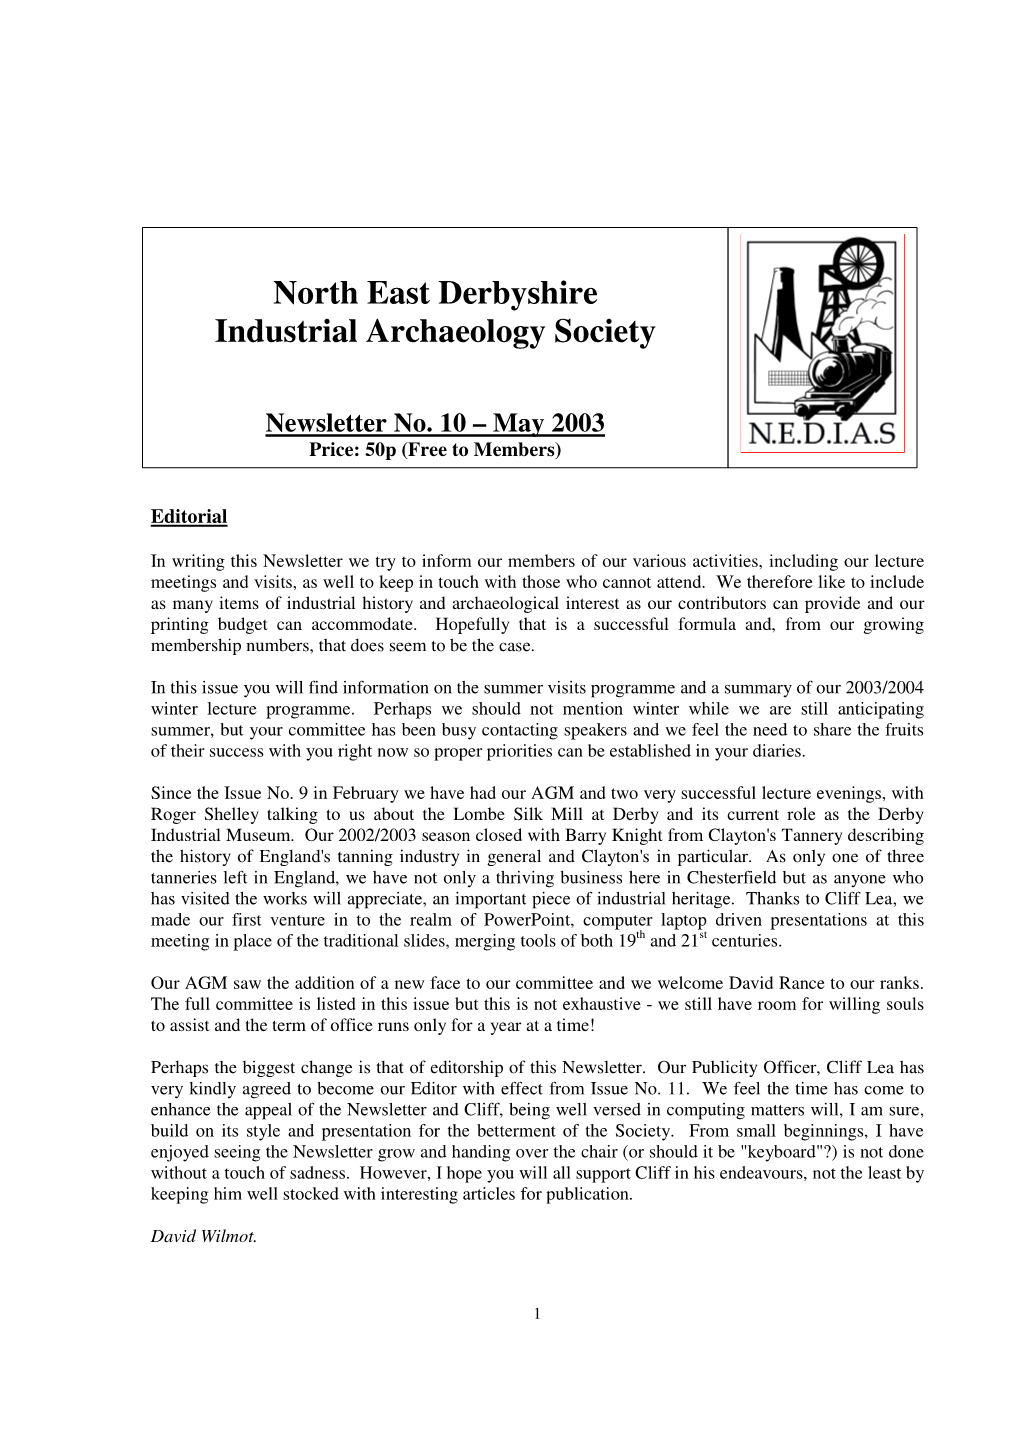 NEDIAS Newsletter No 10 May 2003